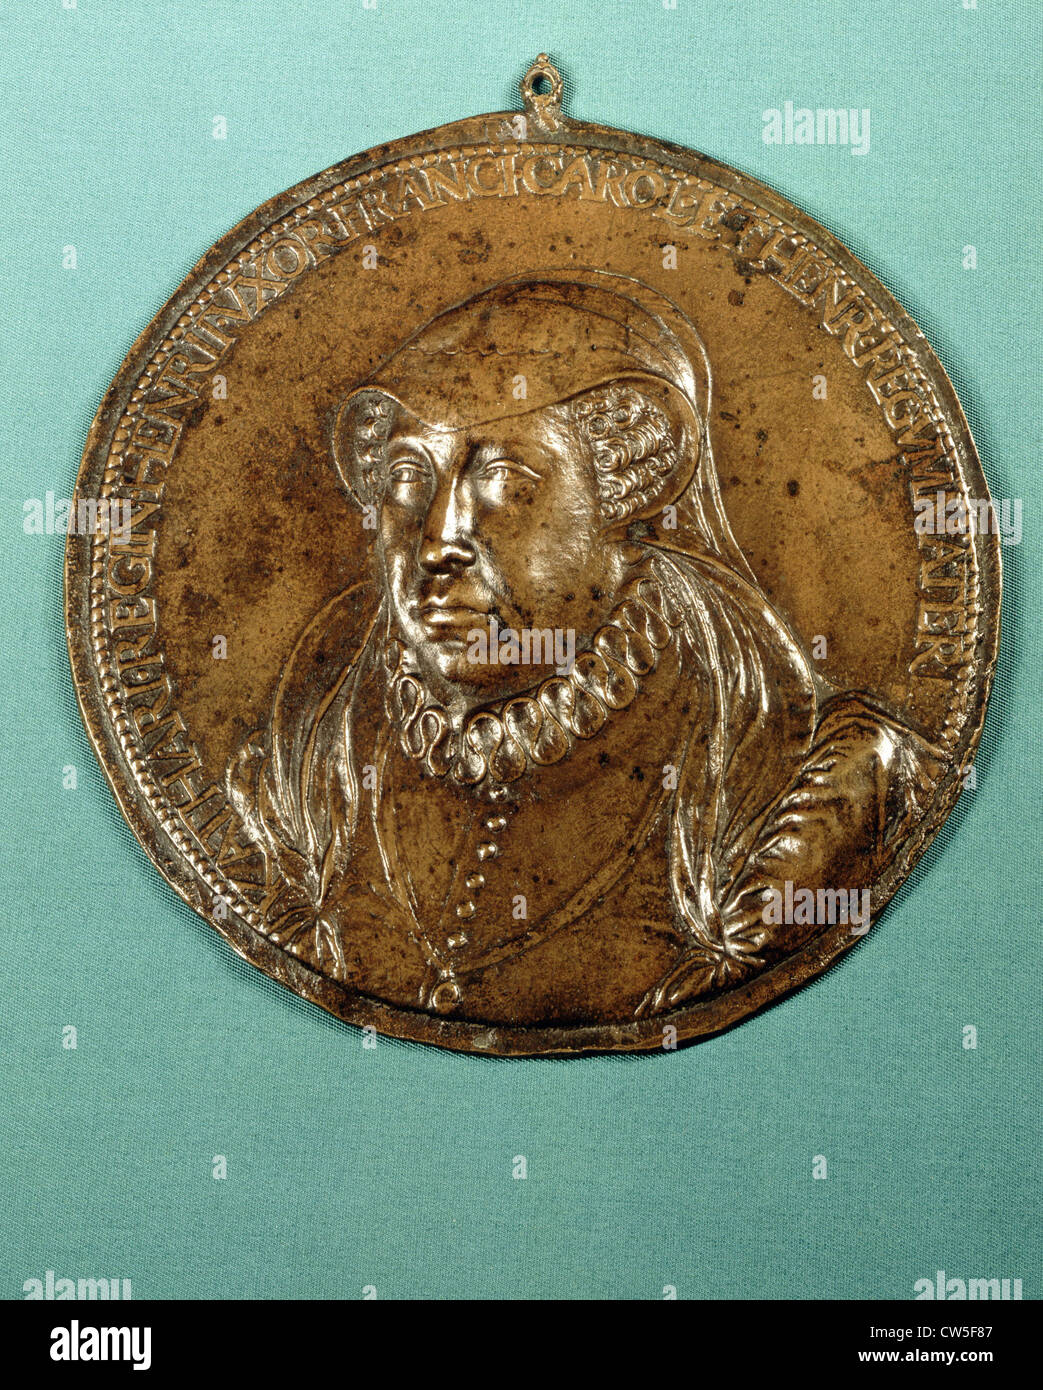 Bronze medal by Germain Pilon. Catherine de Medicis (1519-1589) Stock Photo